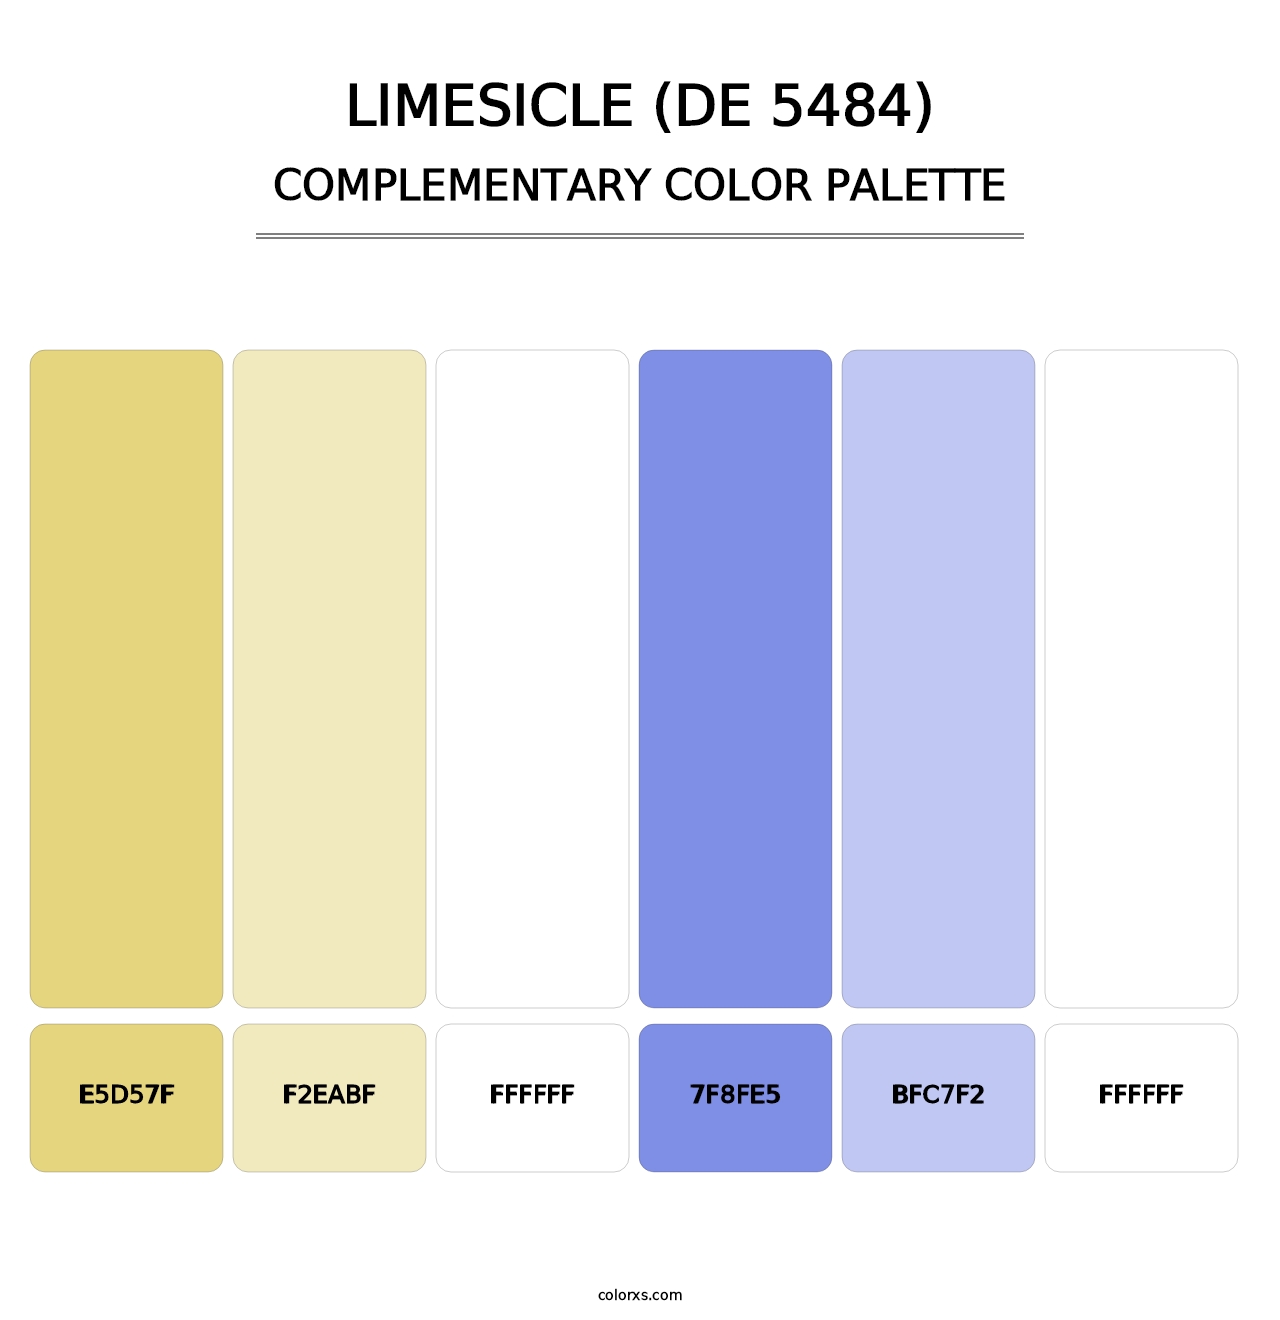 Limesicle (DE 5484) - Complementary Color Palette